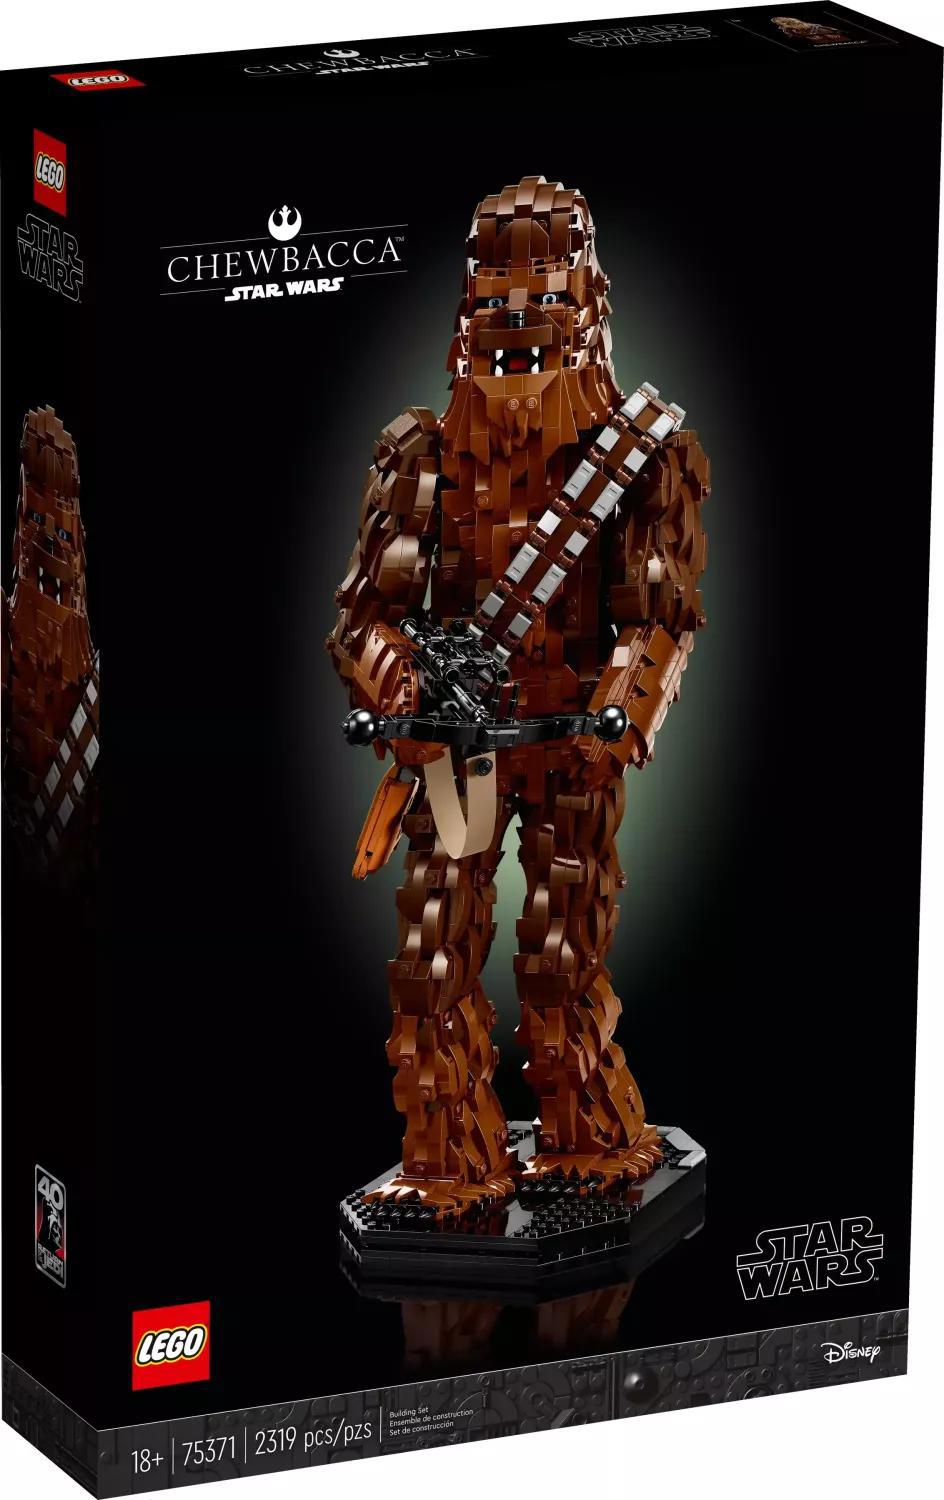 Lego Star Wars Chewbacca 